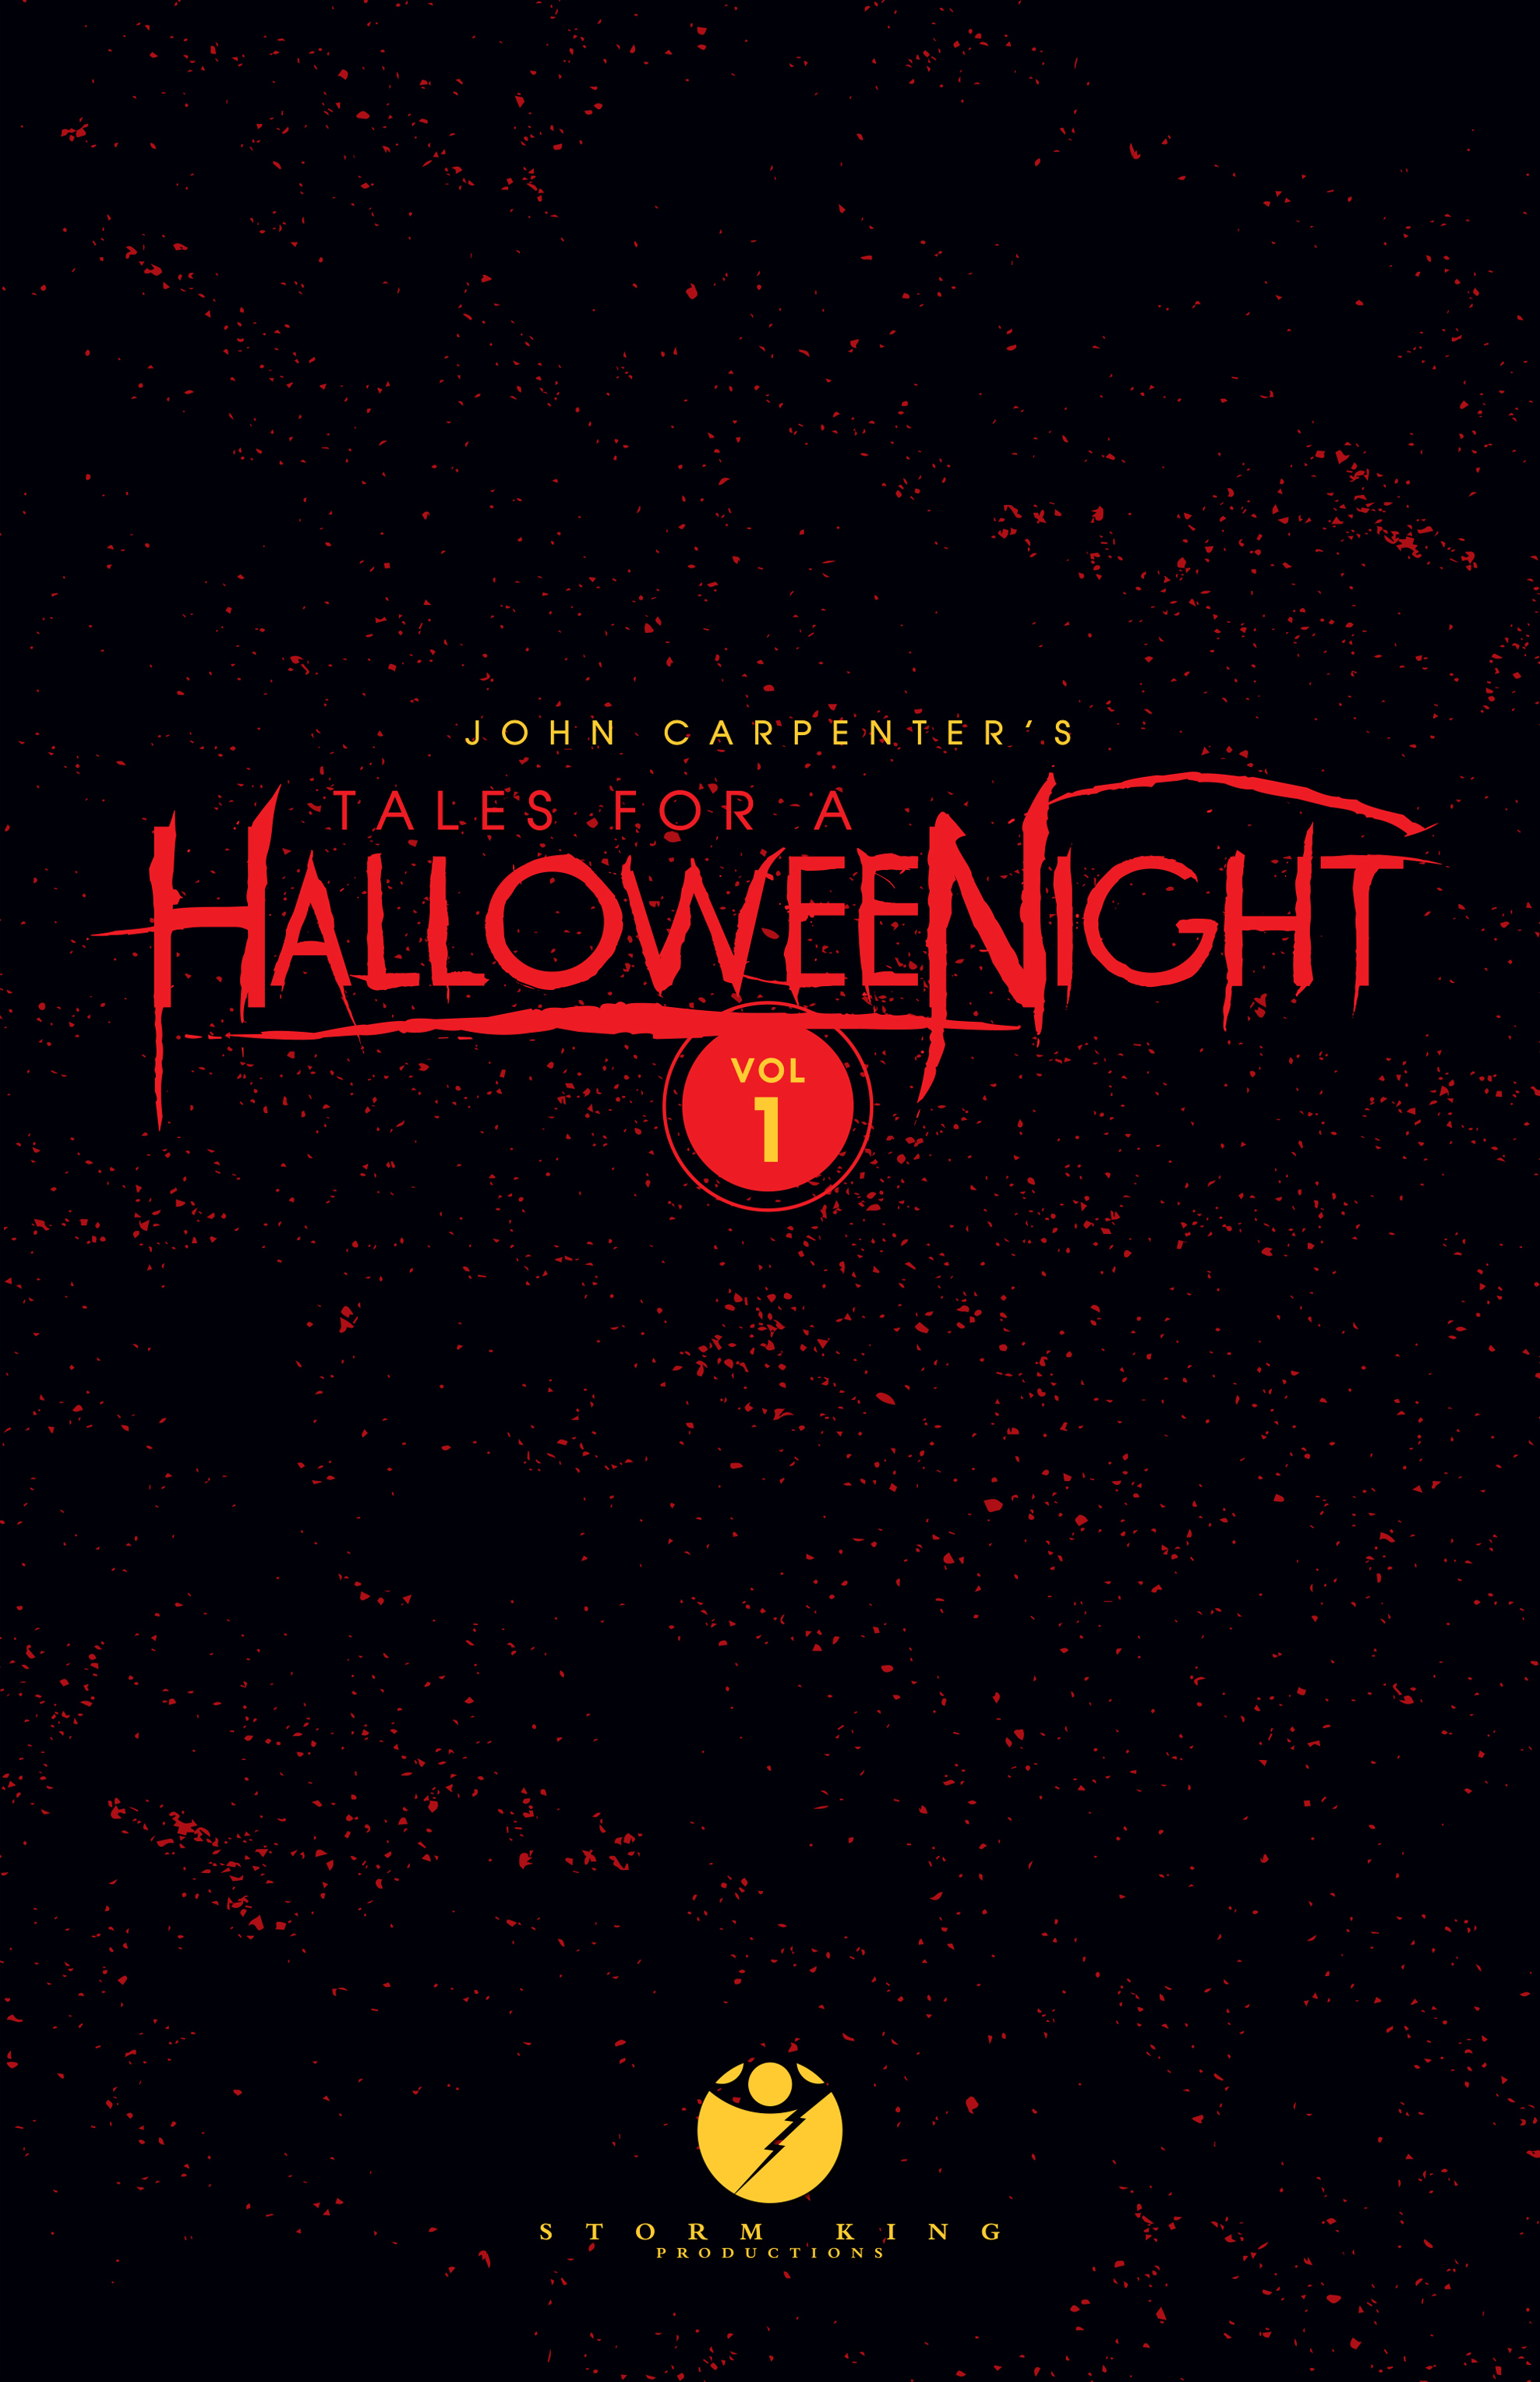 Read online John Carpenter's Tales for a HalloweeNight comic -  Issue # TPB 1 - 2